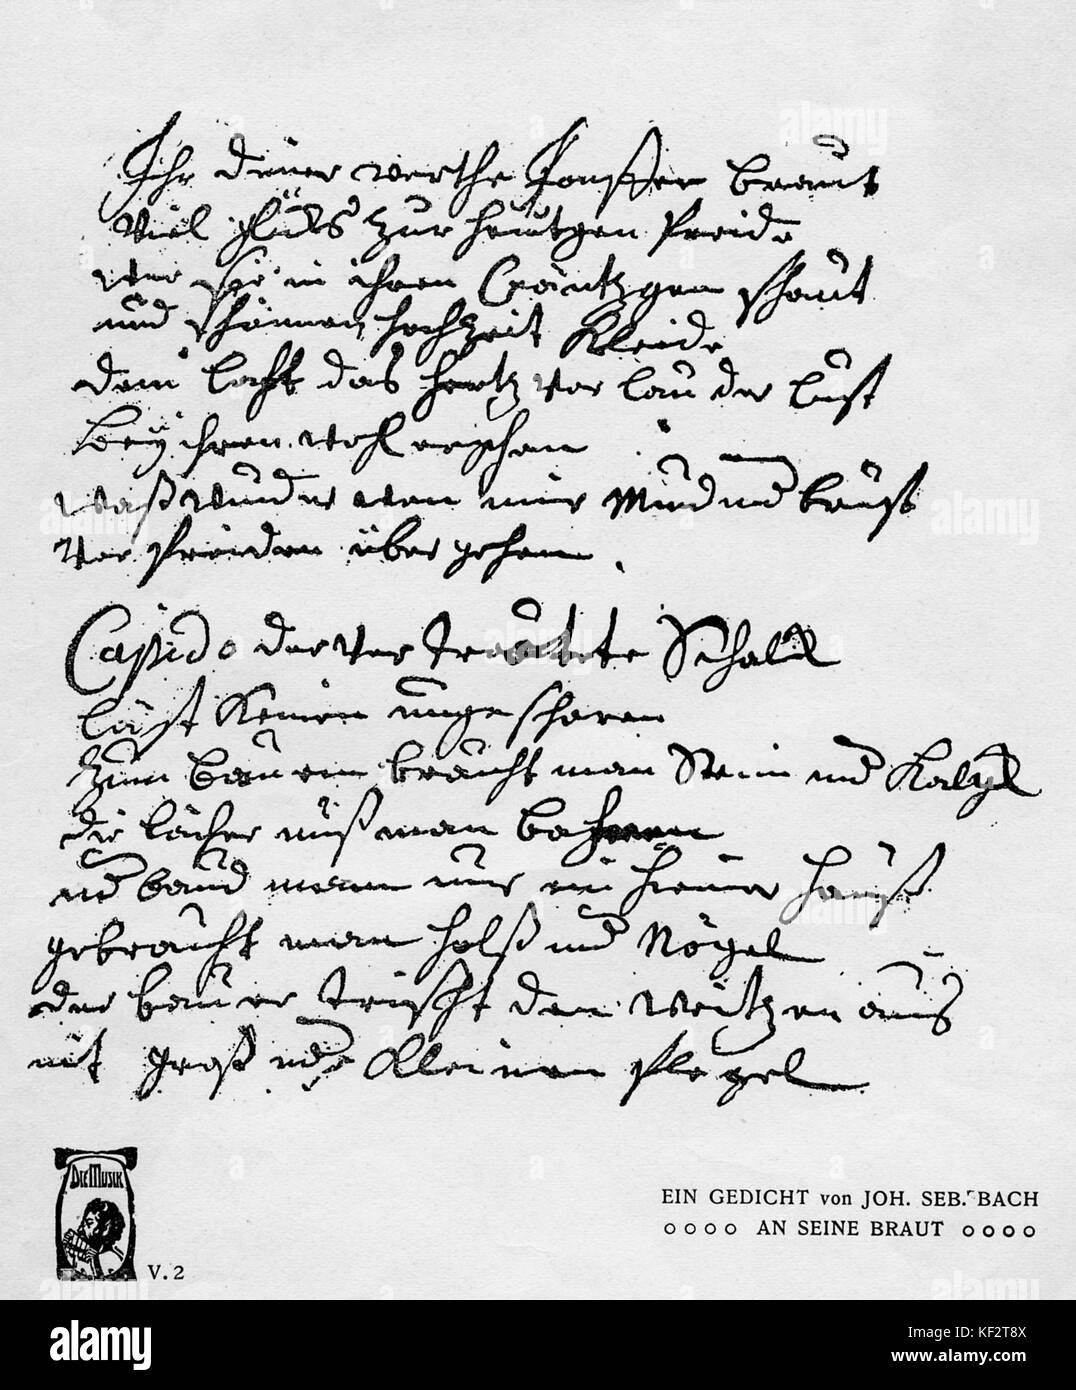 Handwritten poem by Johann Sebastian Bach to his bride. German composer & organist, 21 March 1685 - 28 July 1750 Stock Photo